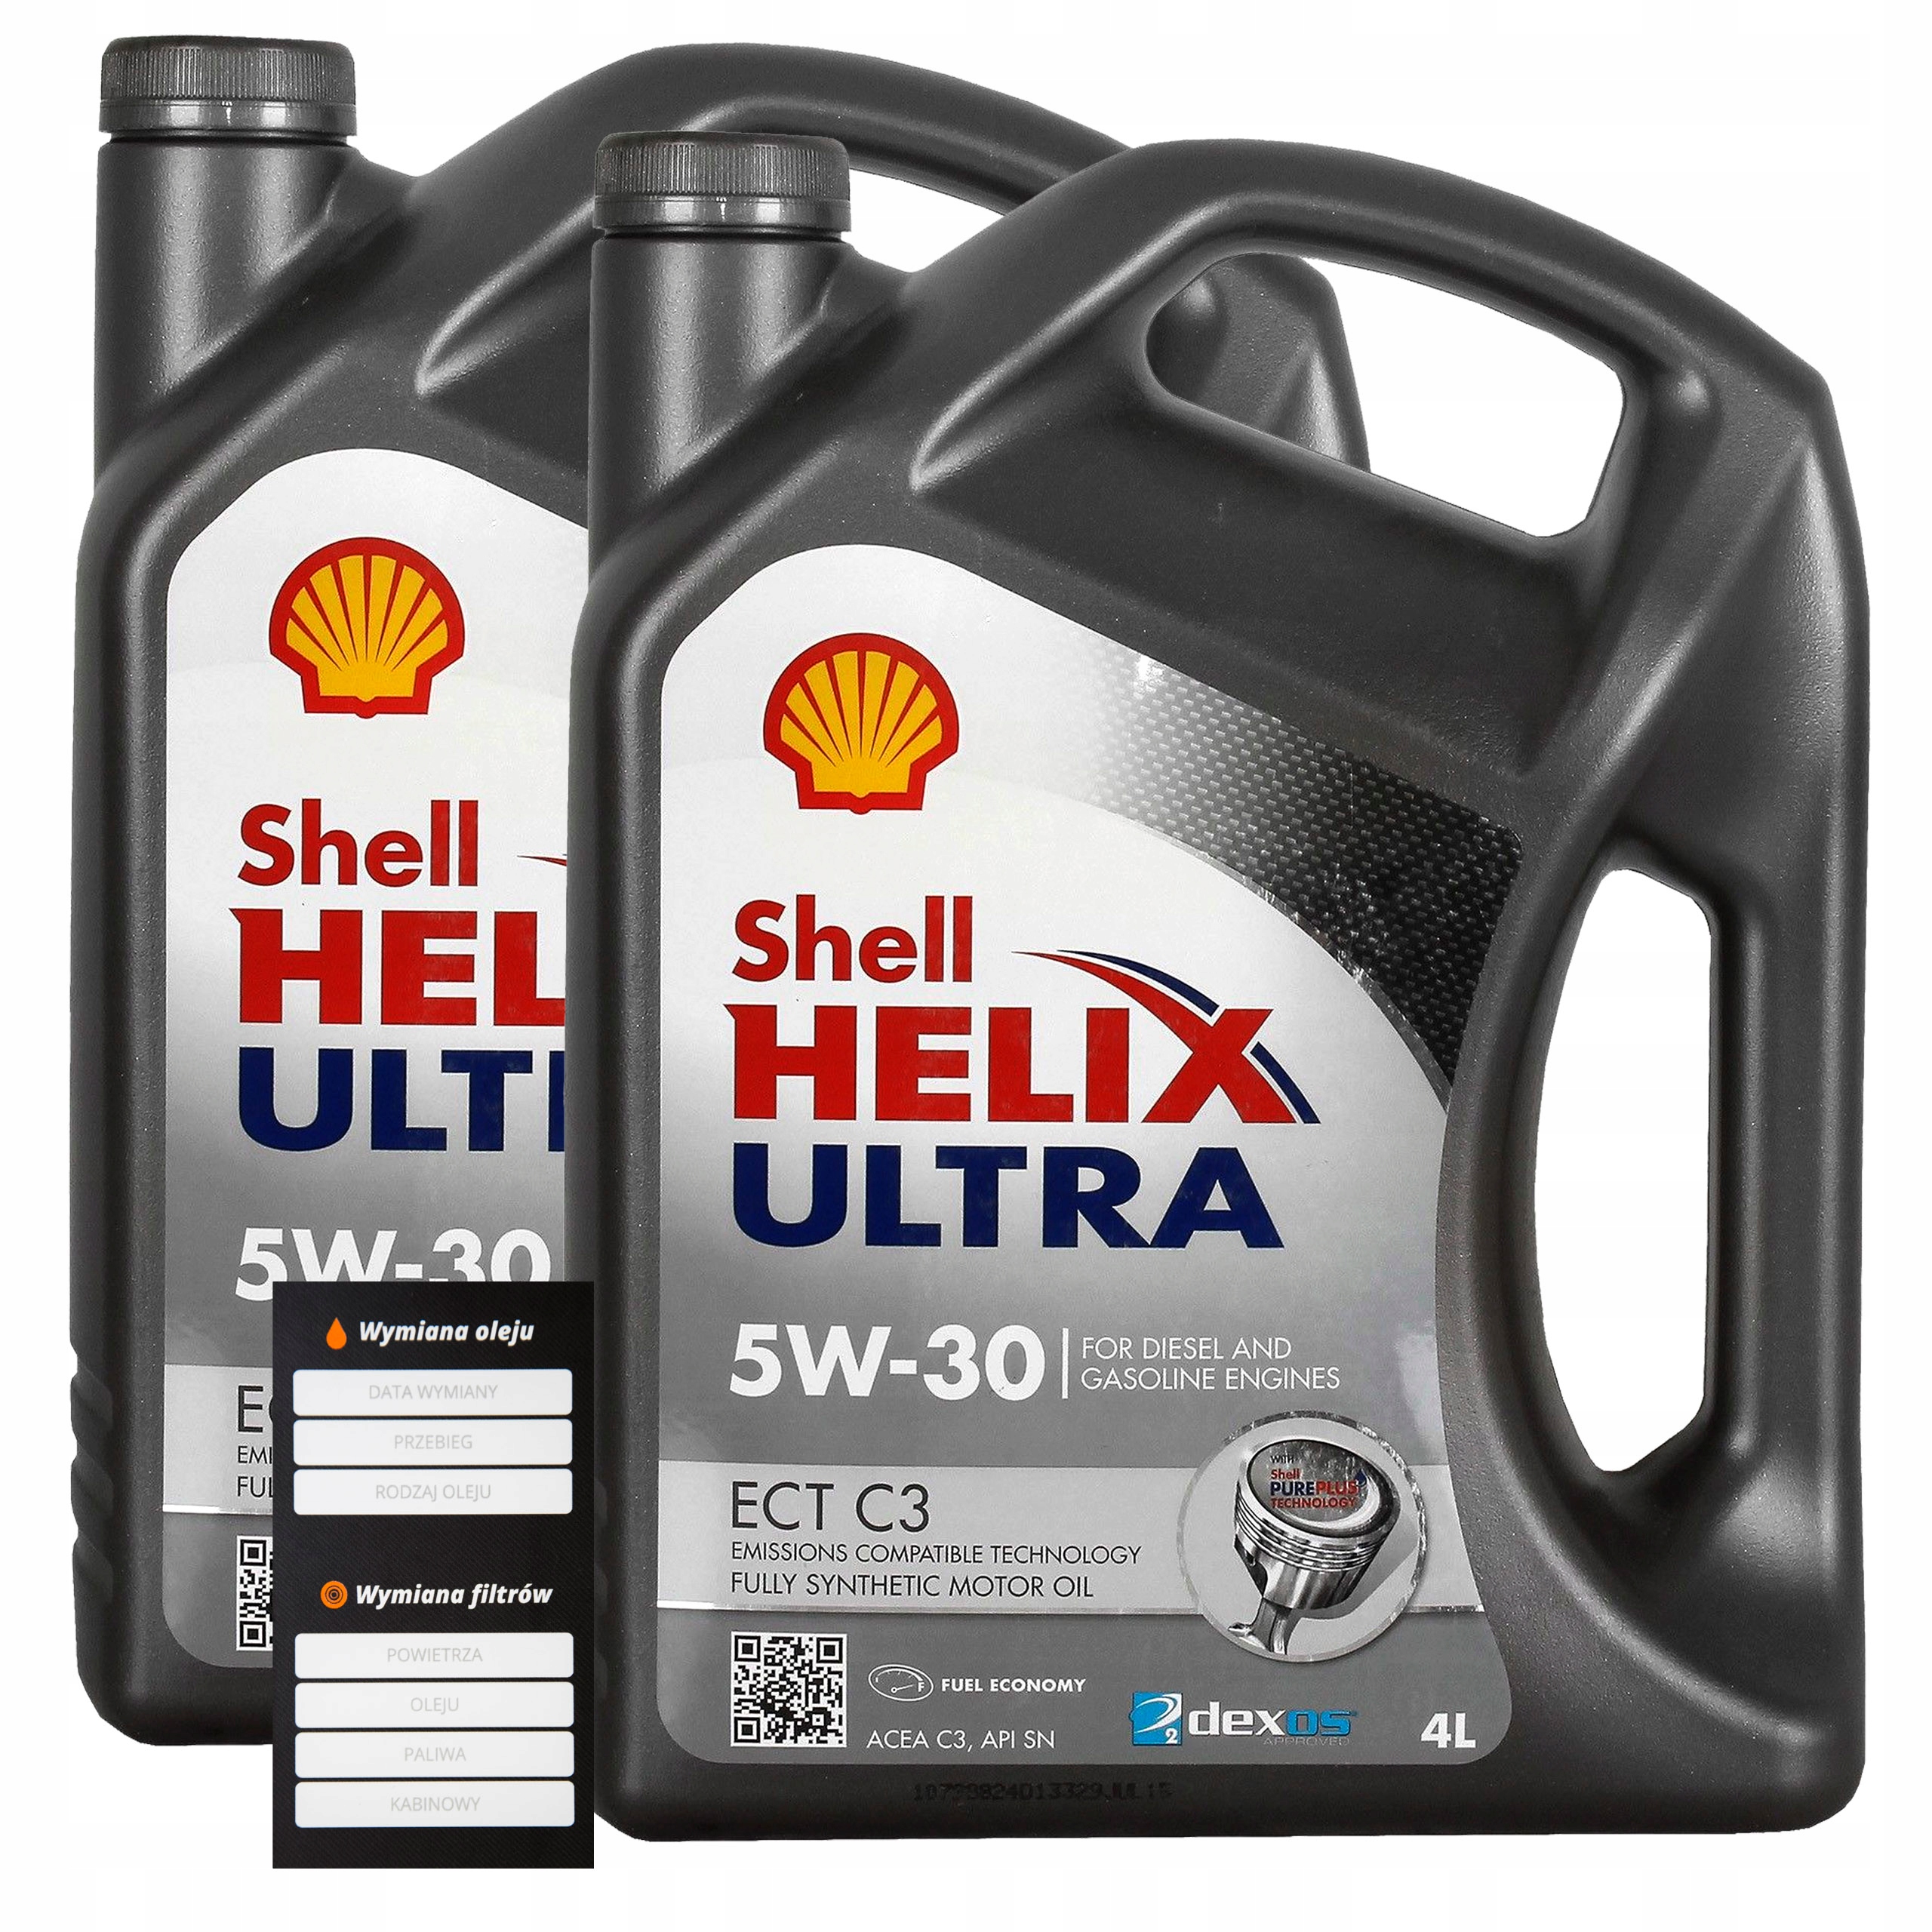 Shell ultra am l. Shell 5w30 ect c3. Shell Helix 5w30. Shell Helix 5w30 ect. Shell Helix Ultra 5w30.